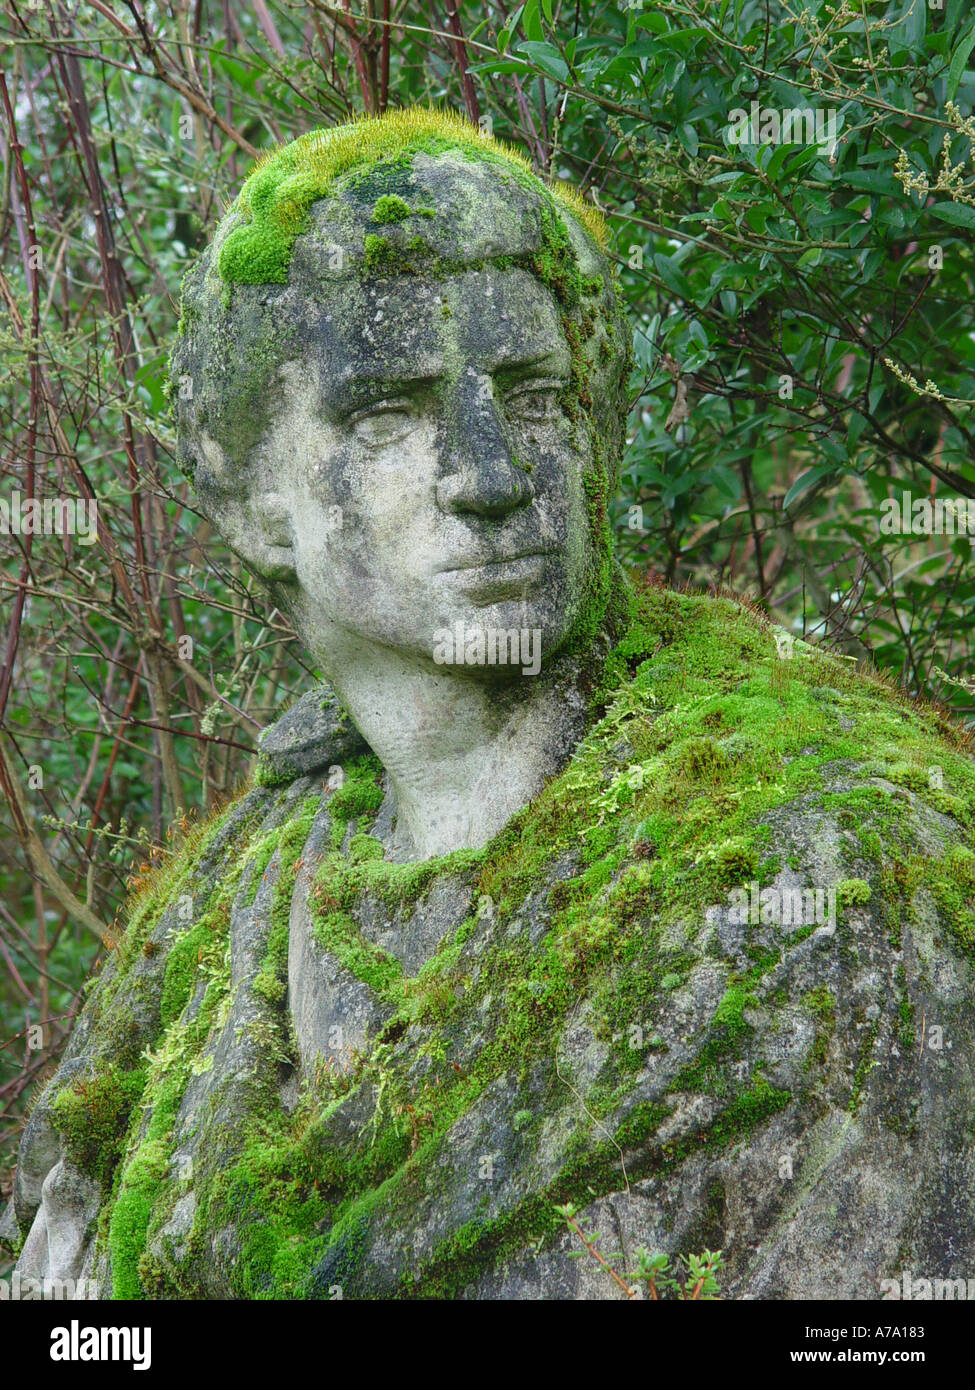 Moss covered statue -Fotos und -Bildmaterial in hoher Auflösung – Alamy